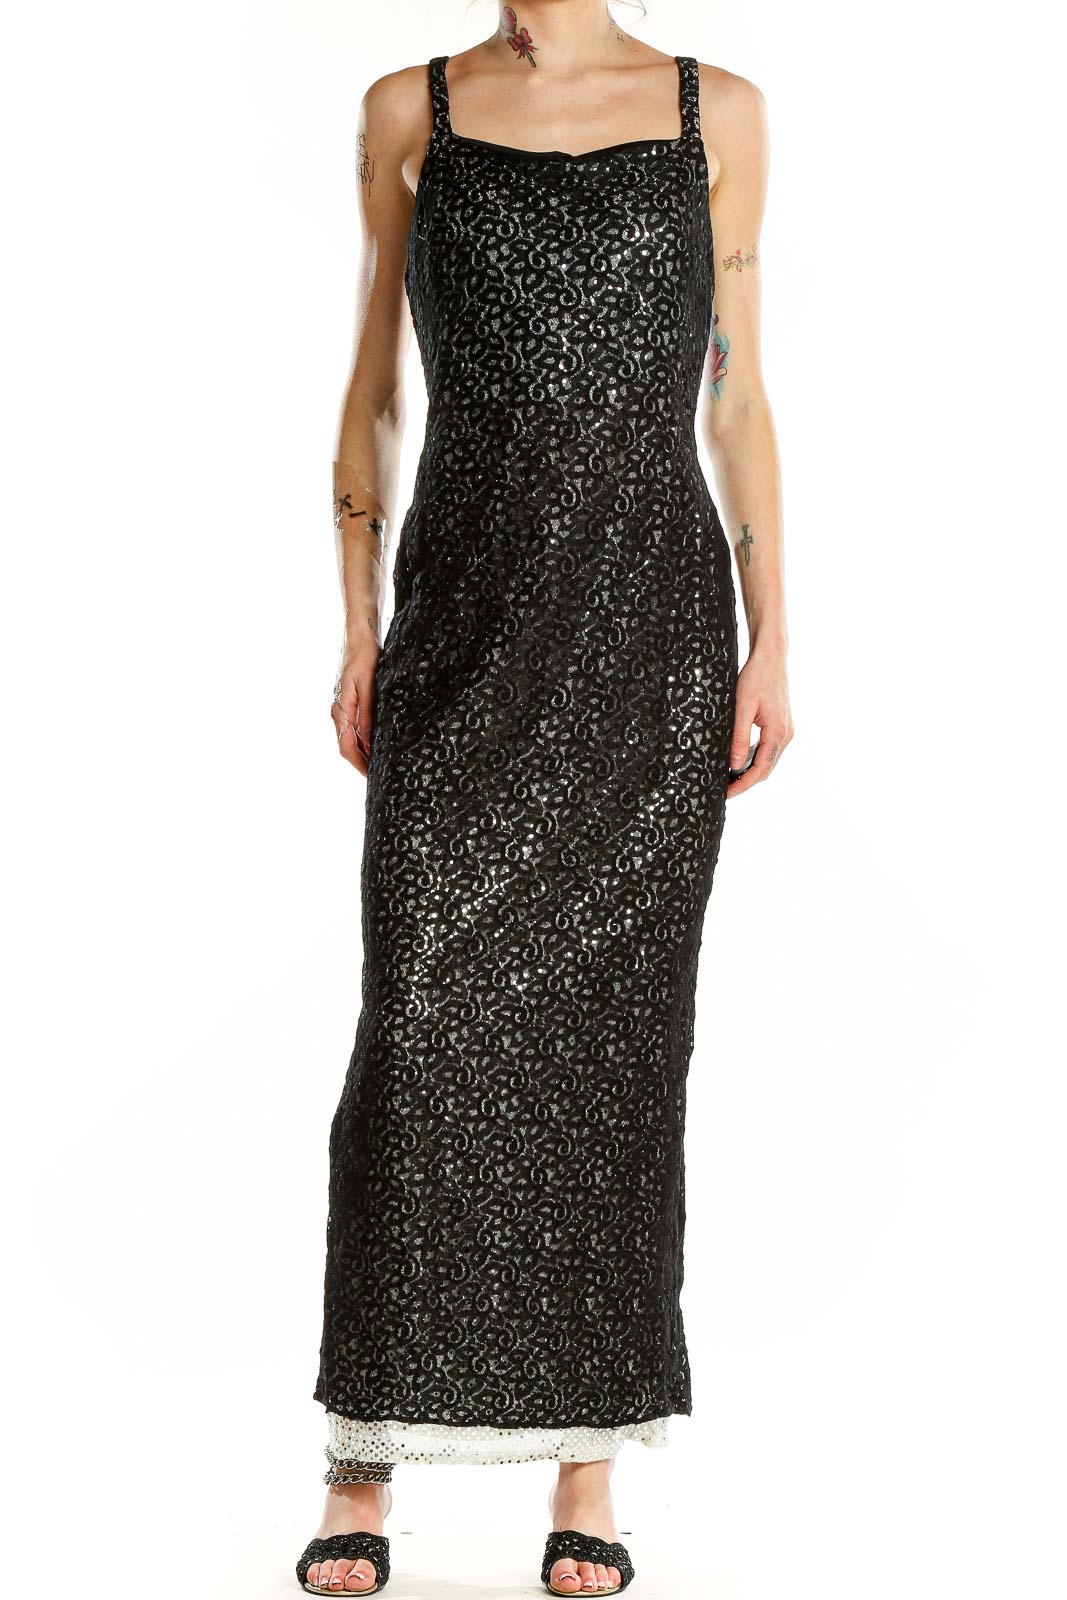 Black Sequin Sleeveless Evening Dress Front